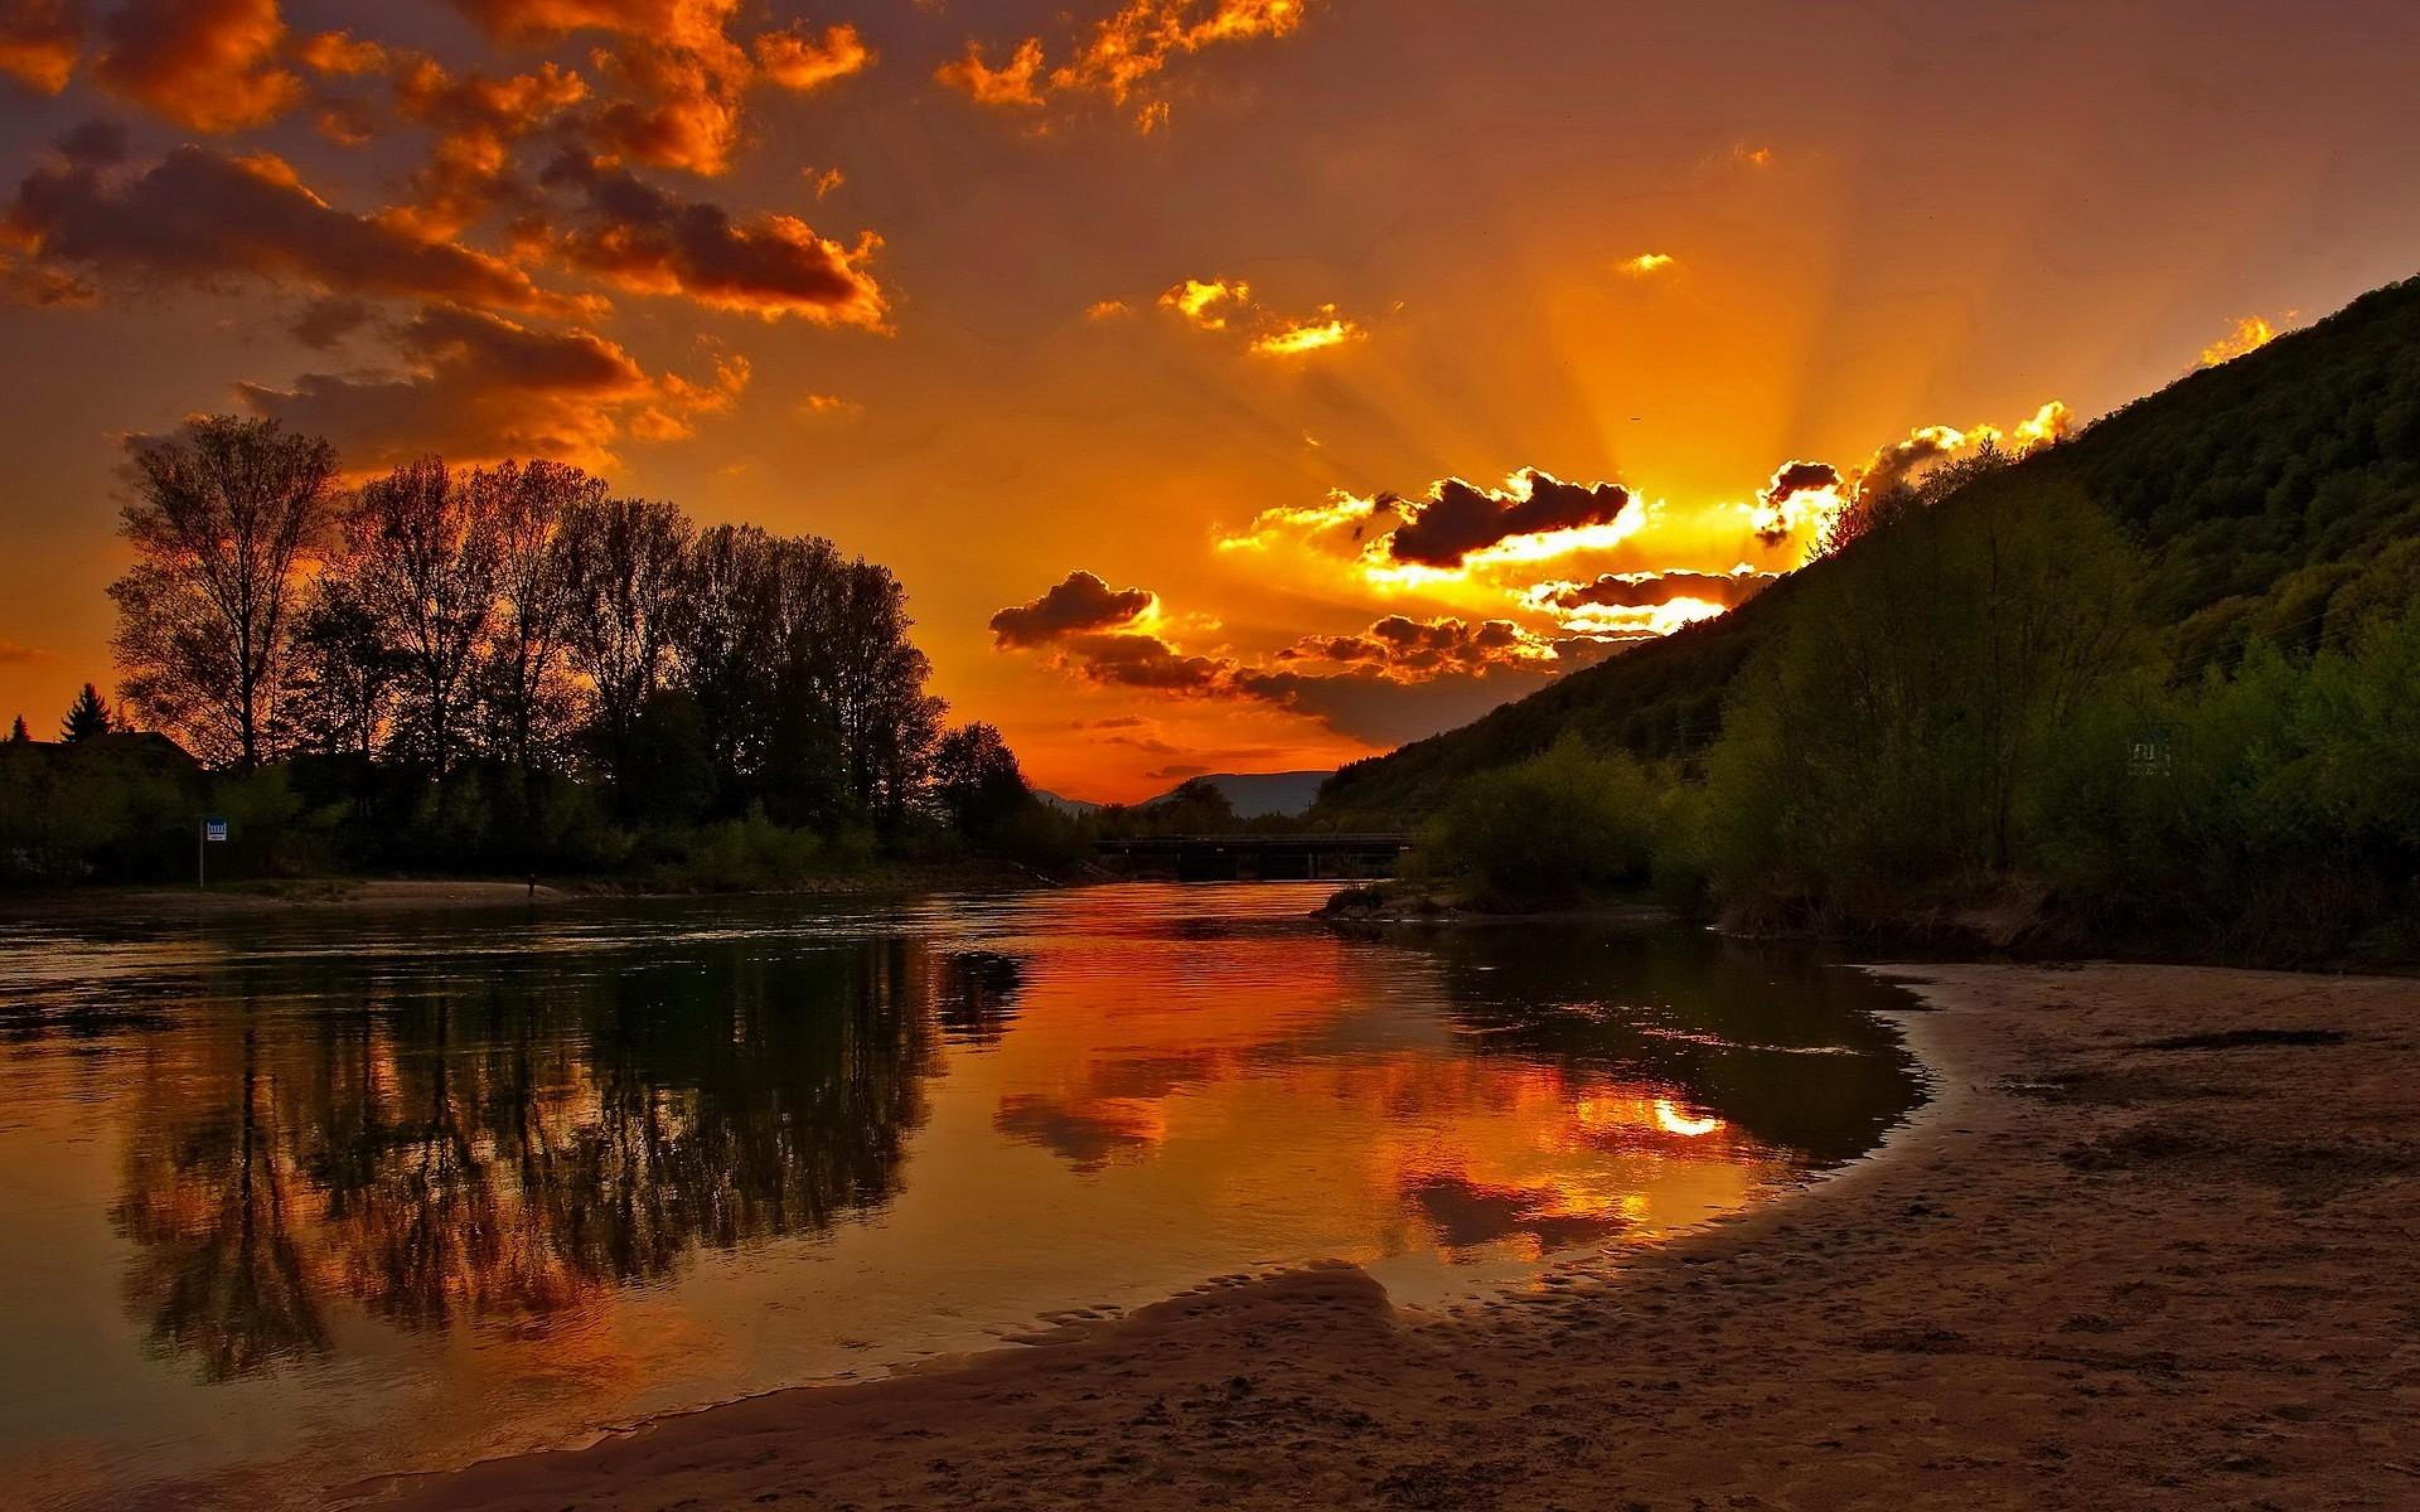 Sunset Sandy River Plazha.crveno Sky With Dark Cloud Reflection In